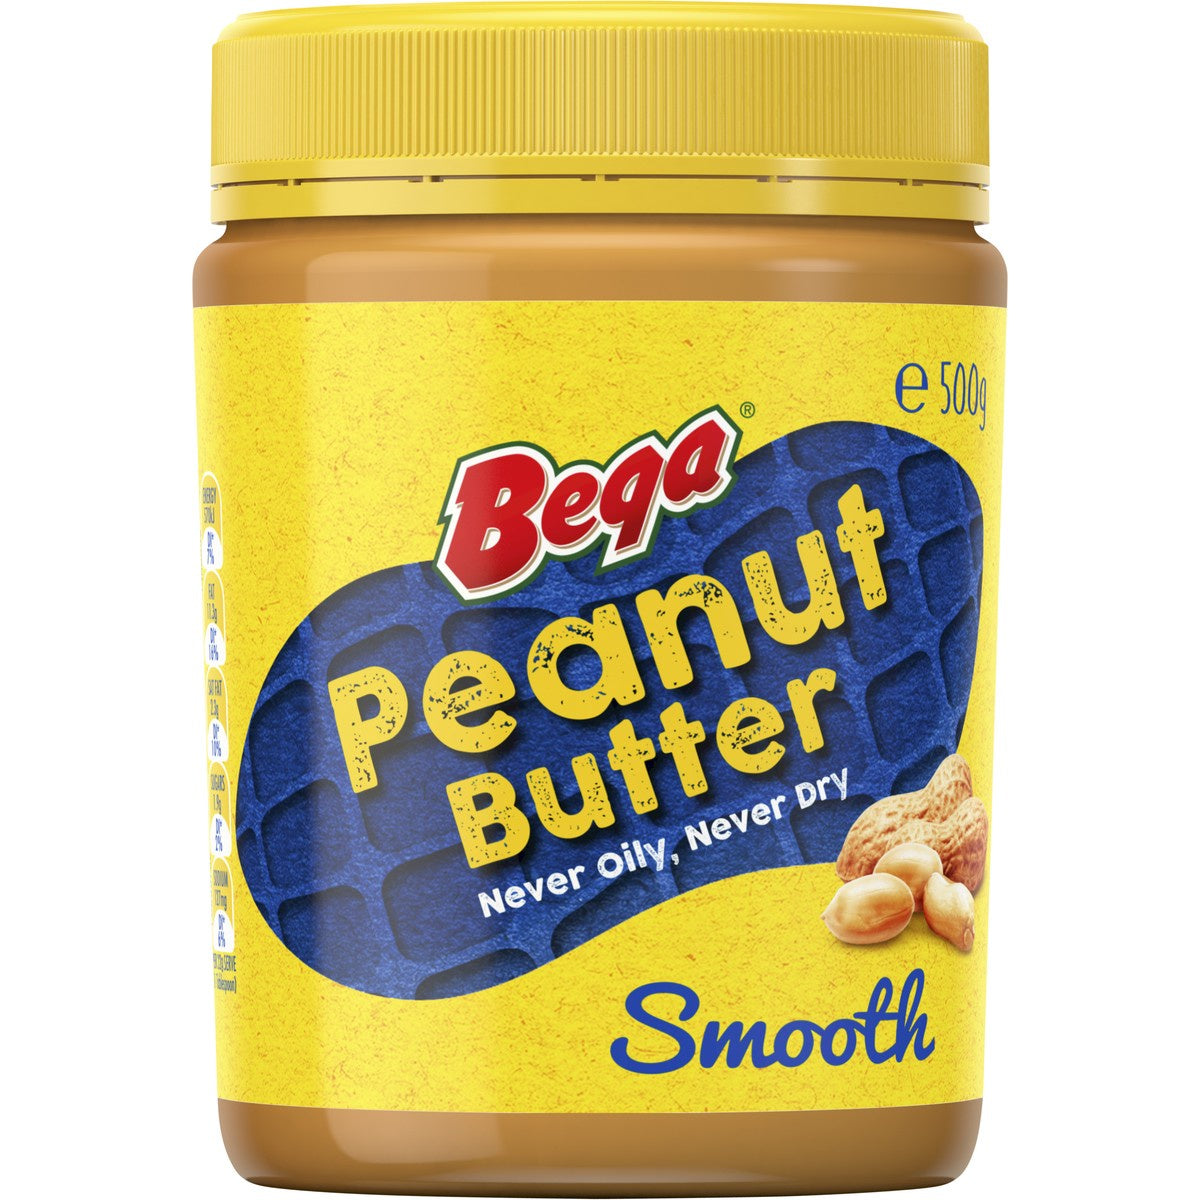 Bega Peanut Butter Smooth 470g **